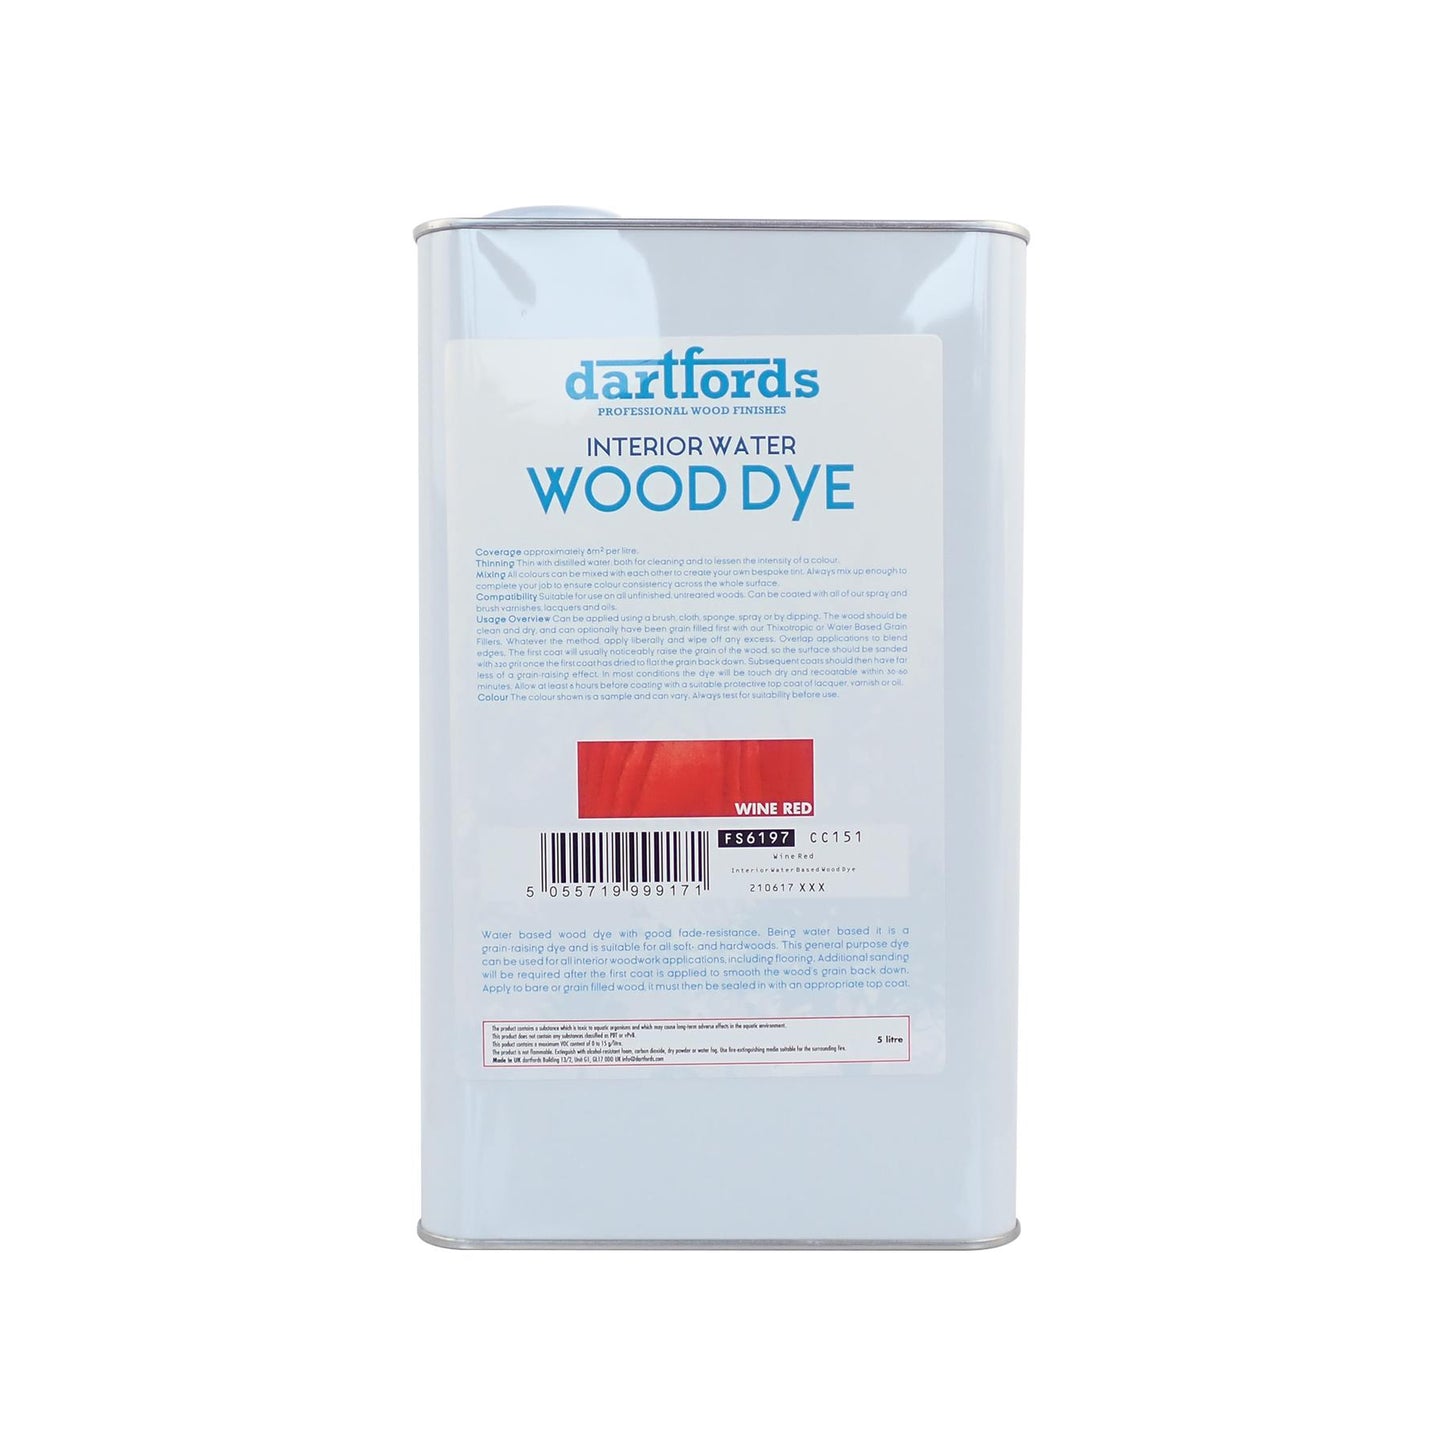 dartfords Wine Red Interior Water Based Wood Dye - 5 litre Jerrycan